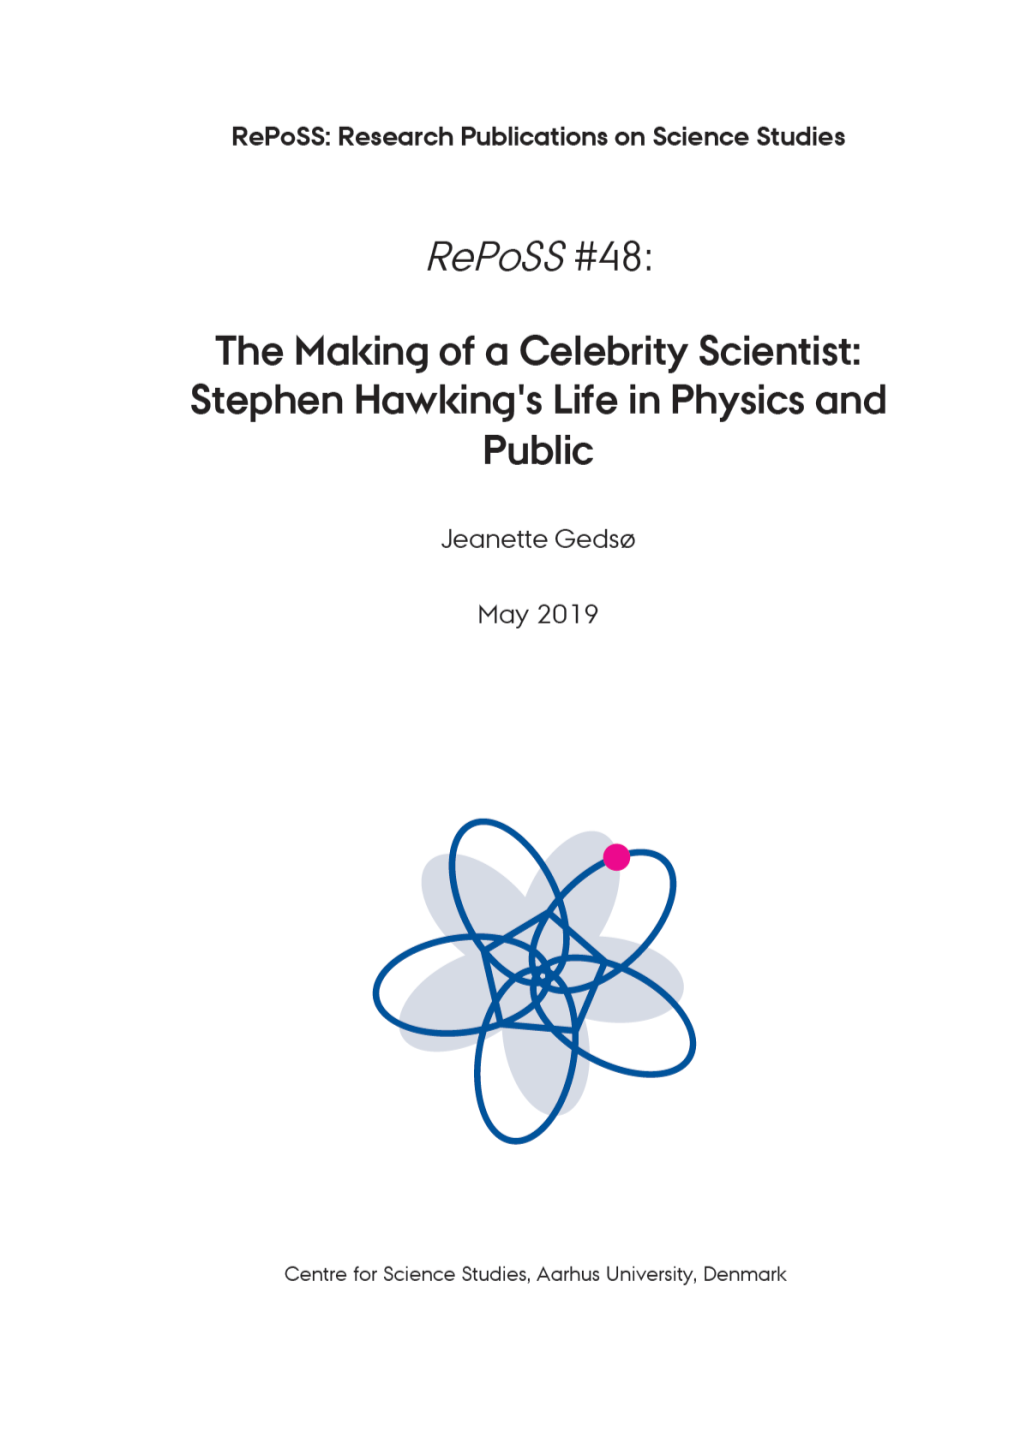 4. Stephen Hawking As a Celebrity Scientist